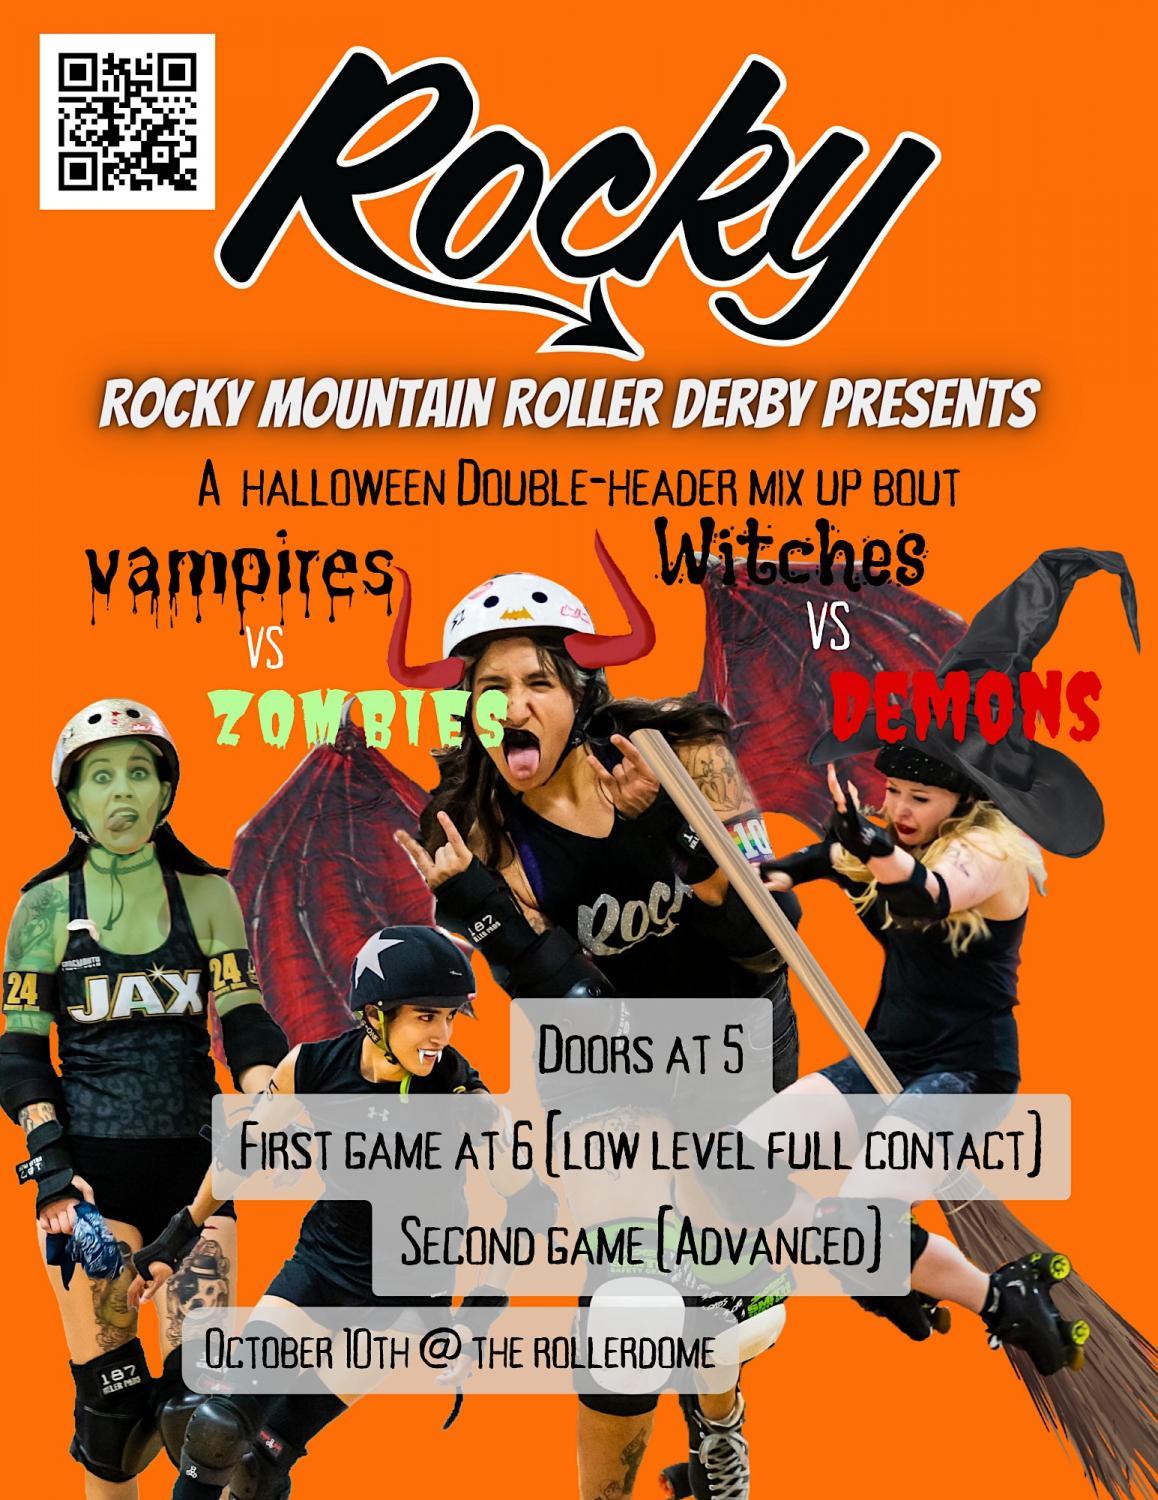 Rocky's Spooky Mix-Up
Sat Oct 8, 5:00 PM - Sat Oct 8, 9:30 PM